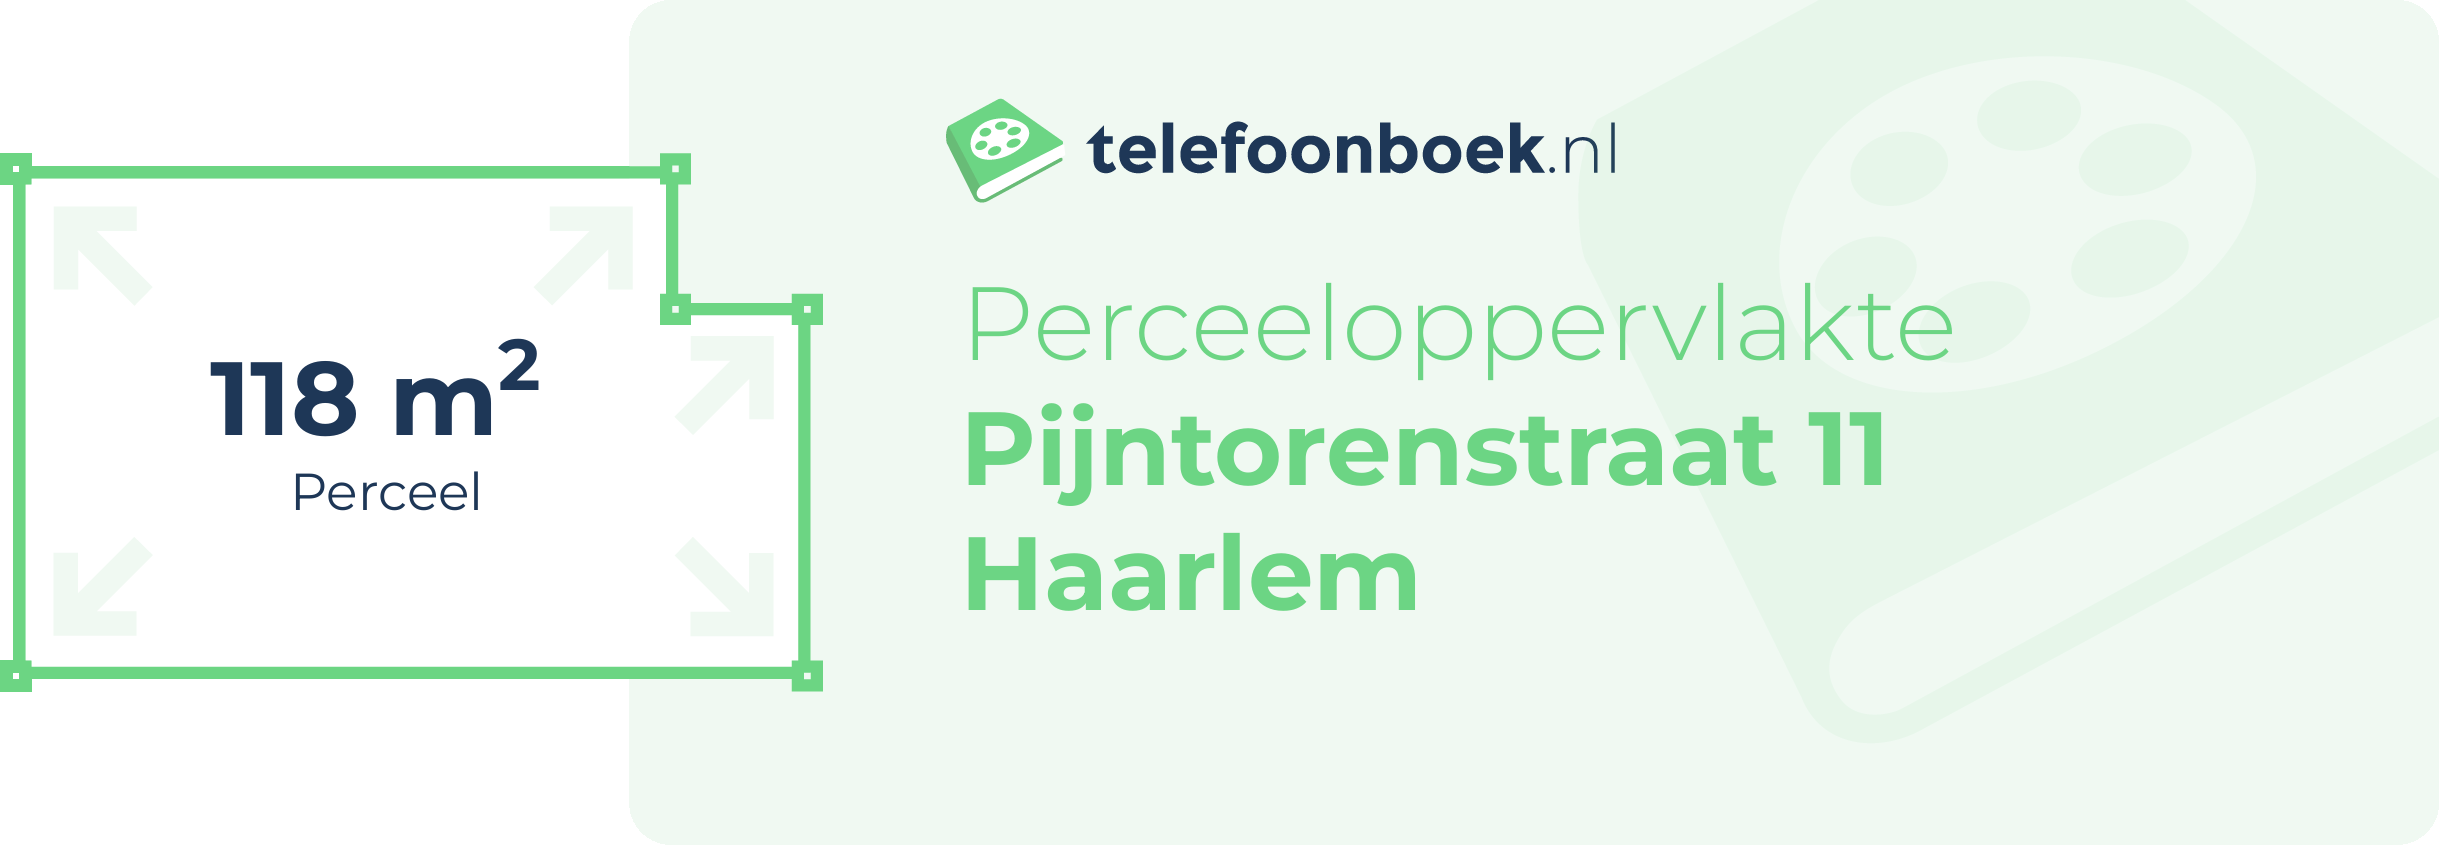 Perceeloppervlakte Pijntorenstraat 11 Haarlem